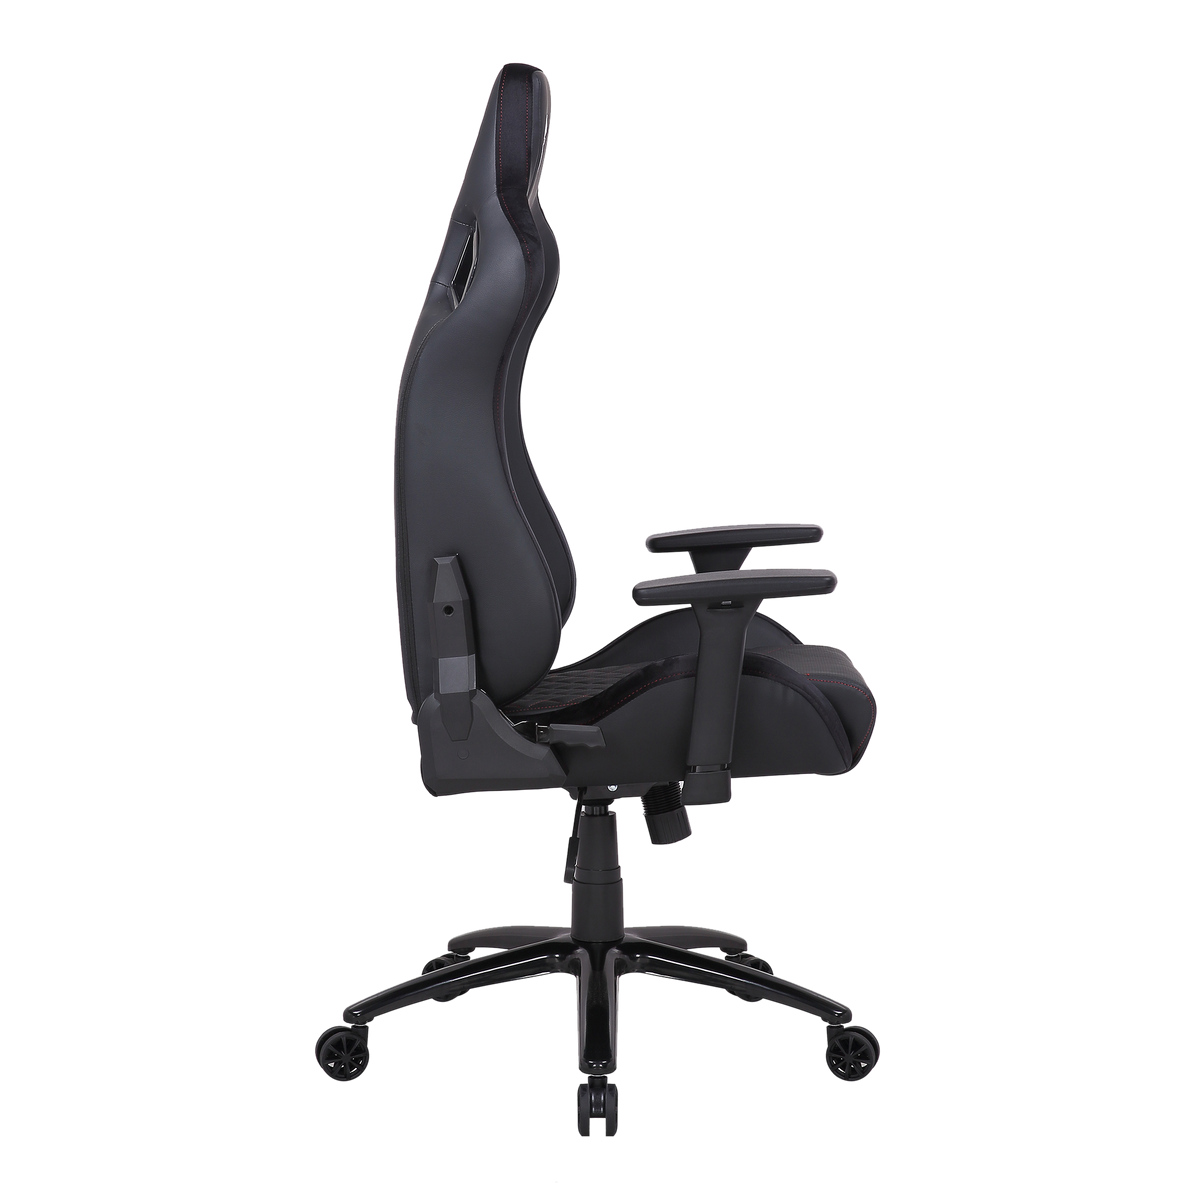 GAMEON GT Series Gaming Chair - Black